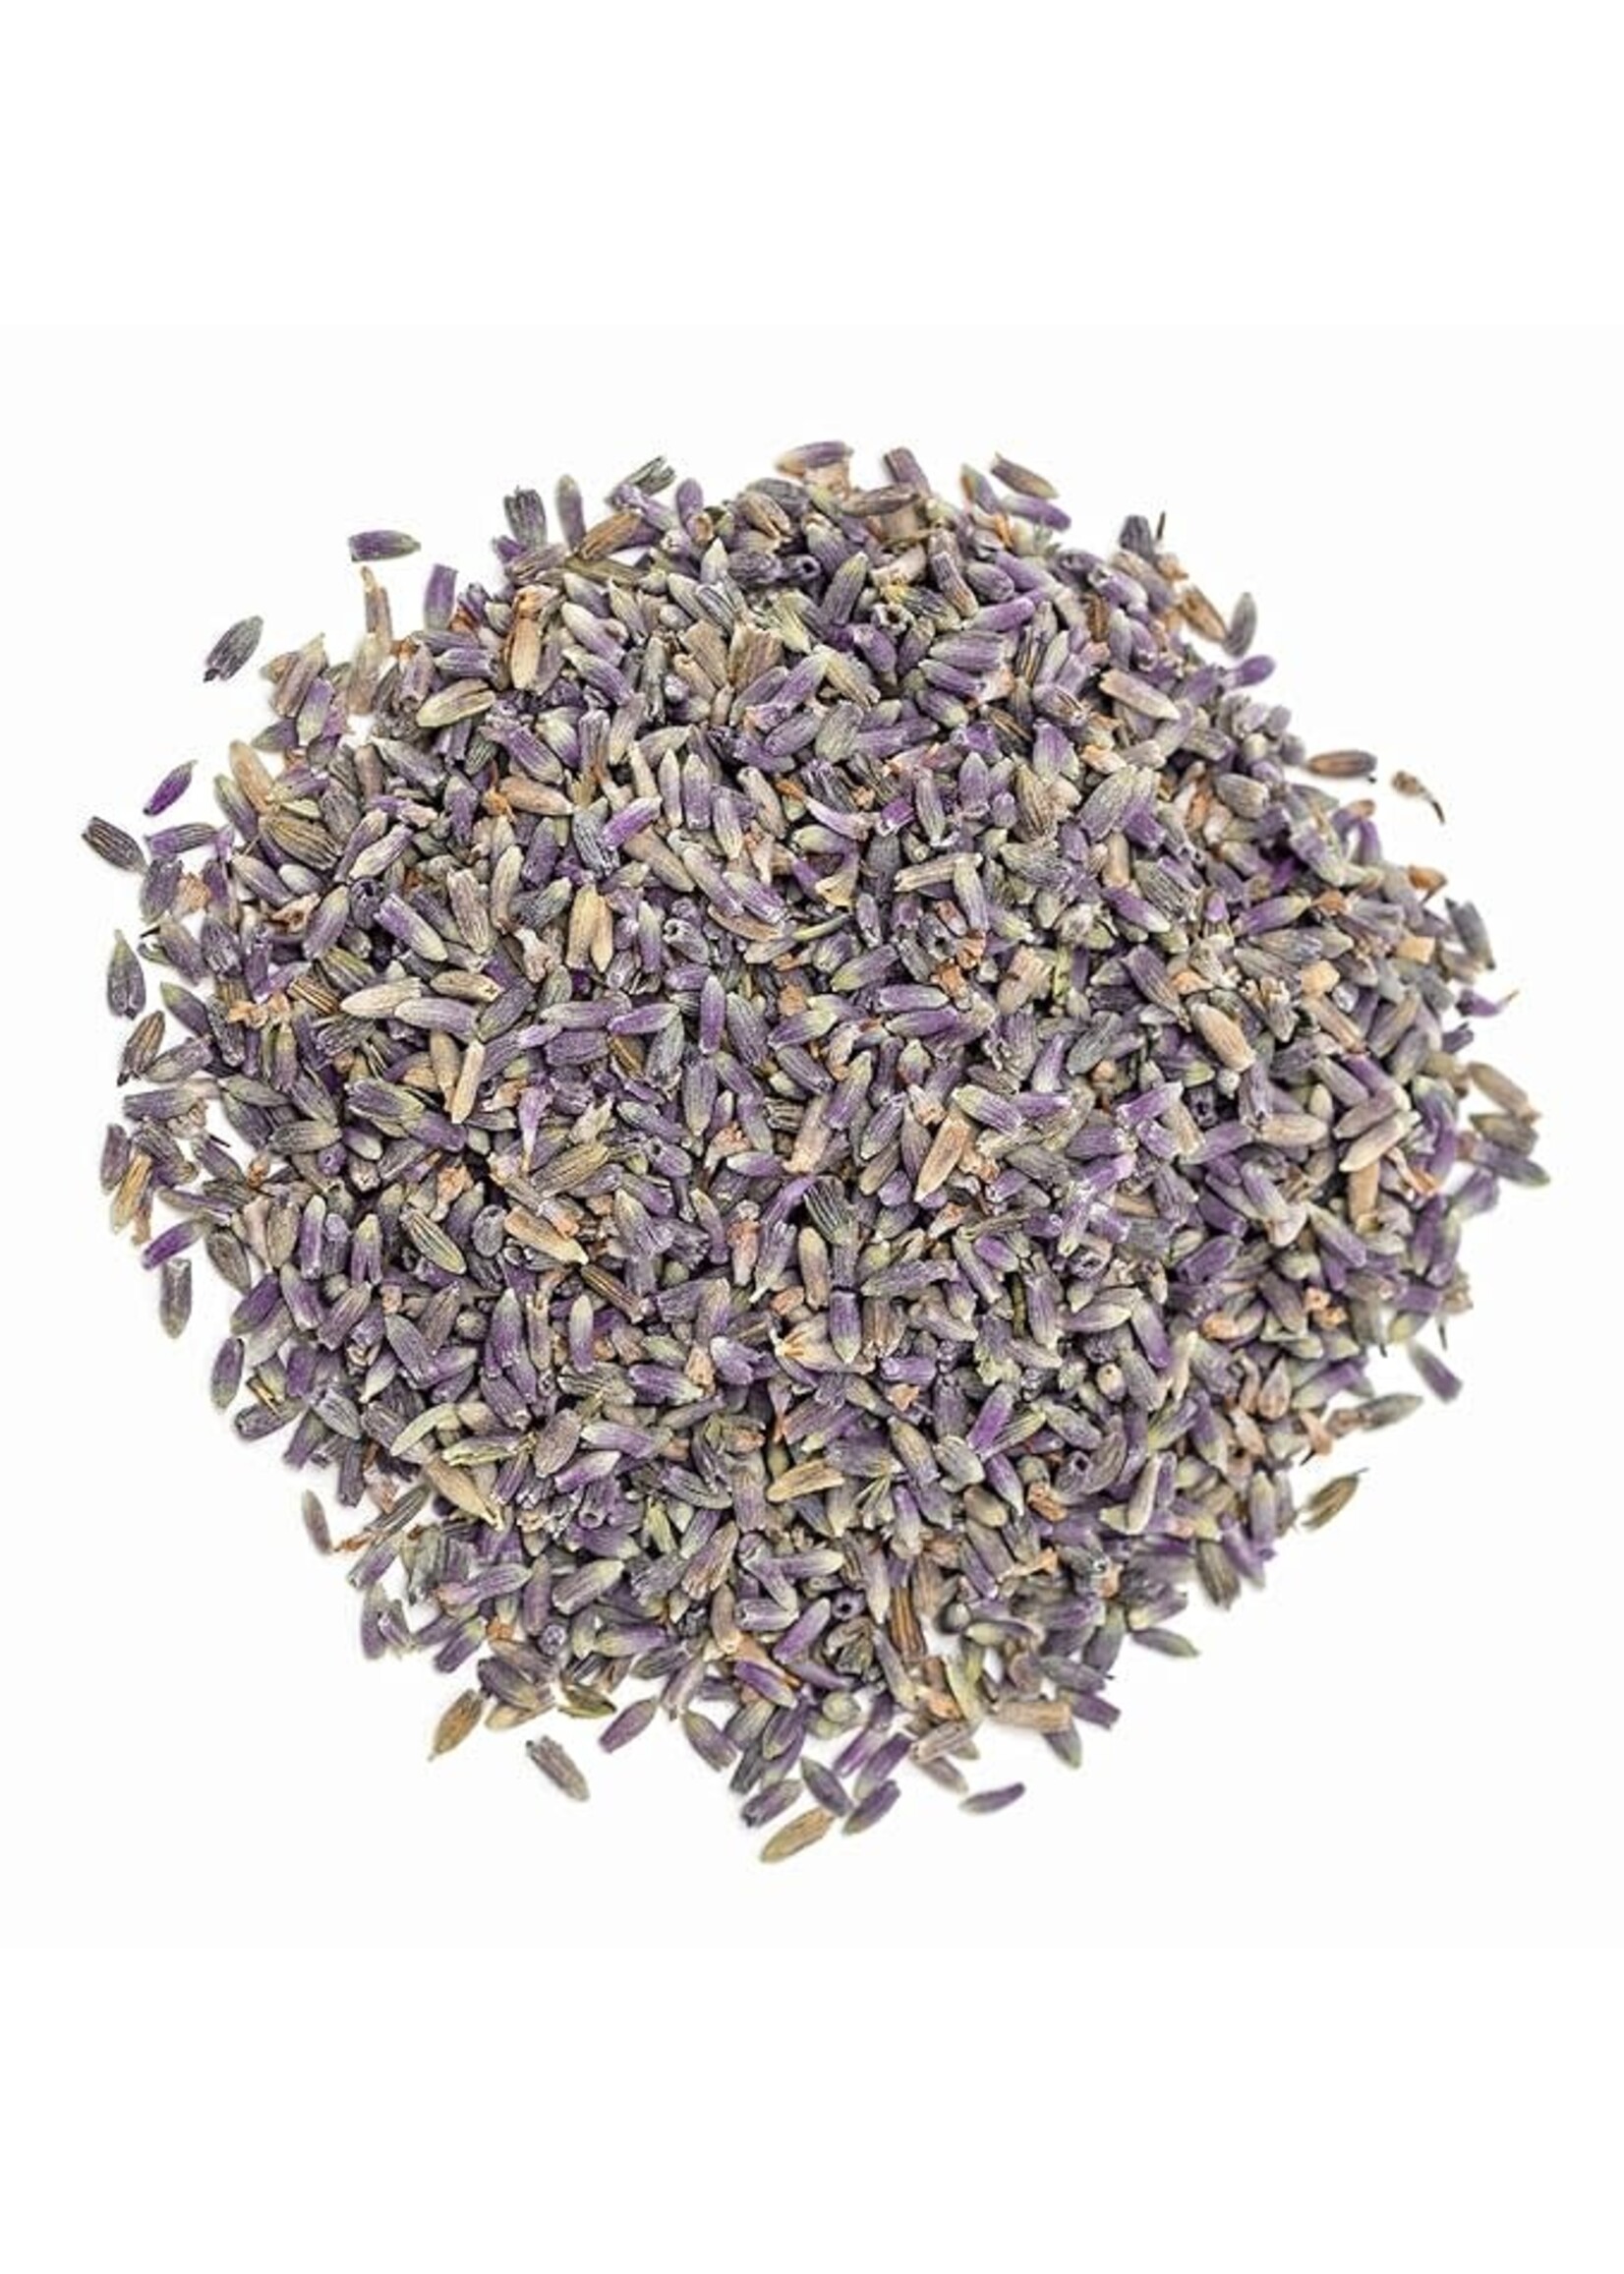 Lavender Flowers | Lavendula augustifolia | Cut & Sifted Organic